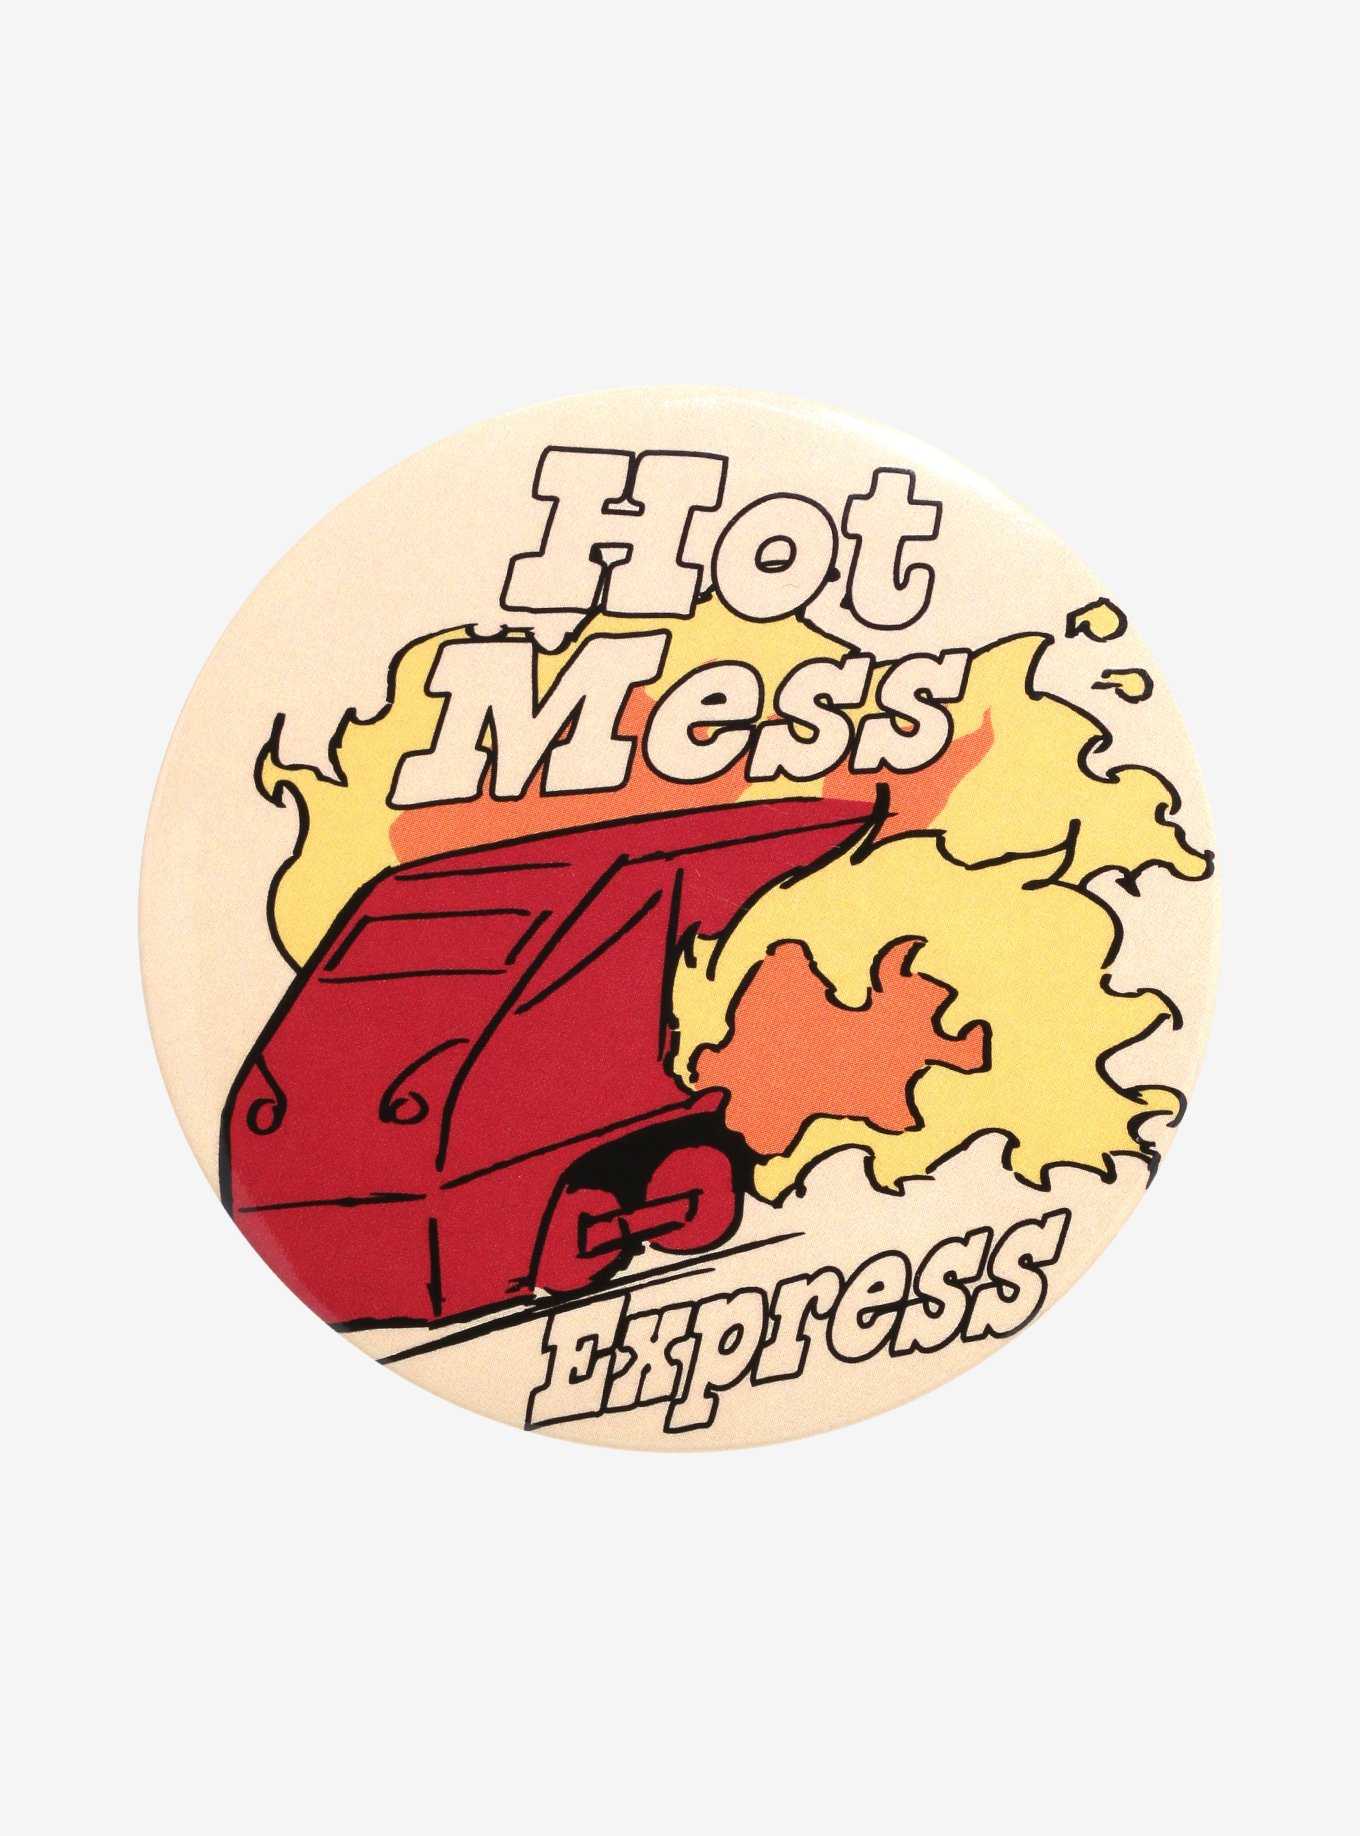 Hot Mess Express 3 Inch Button, , hi-res